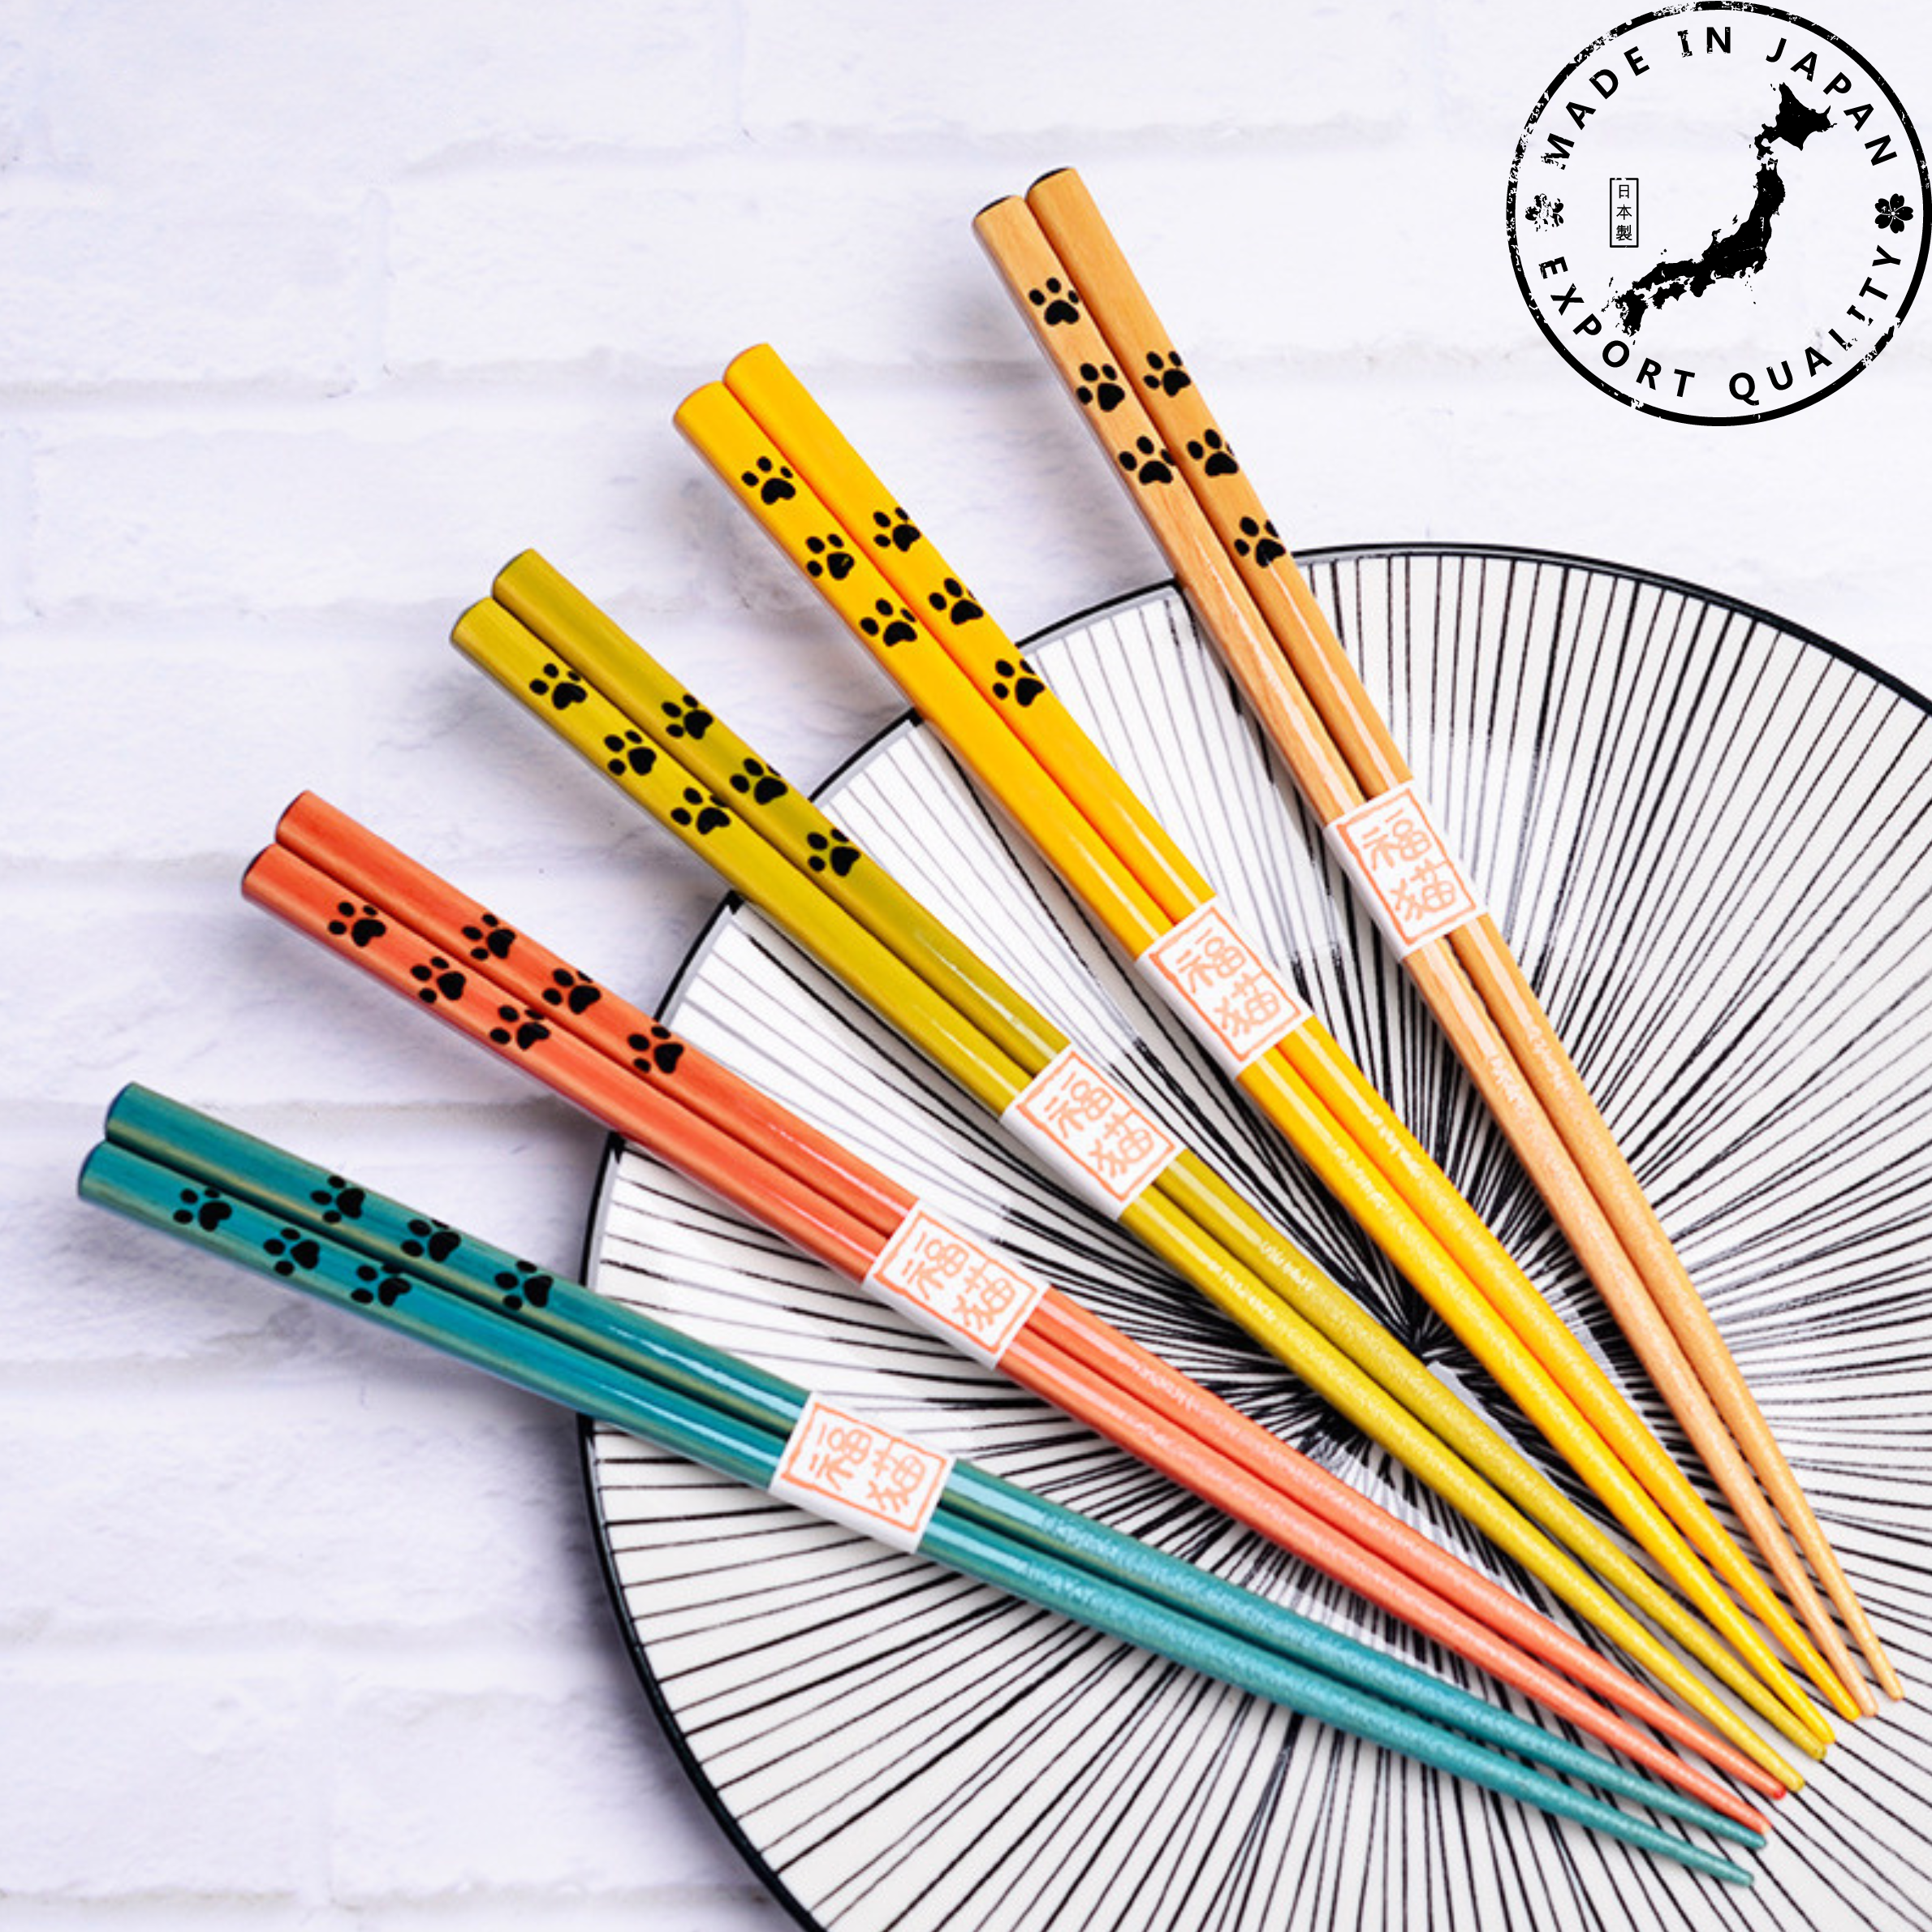 Japanese PawPrint Handcrafted Wooden Chopsticks Set of 5 - MASU